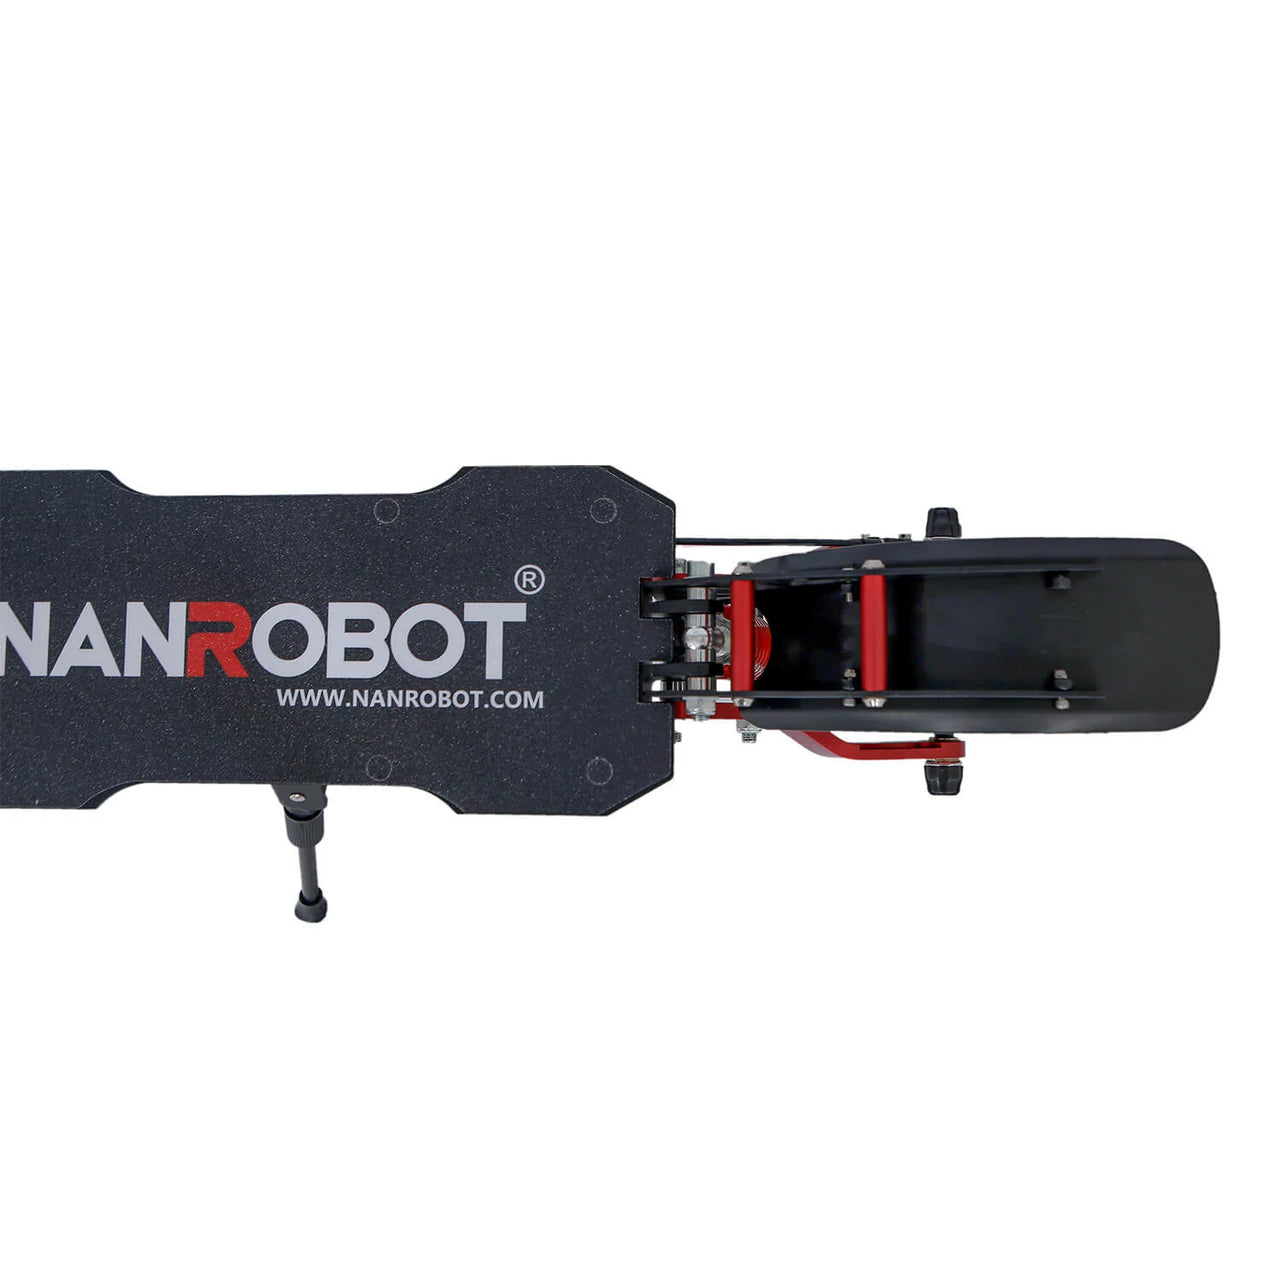 Nanrobot D4+ 3.0 All-Terrain Electric Scooter